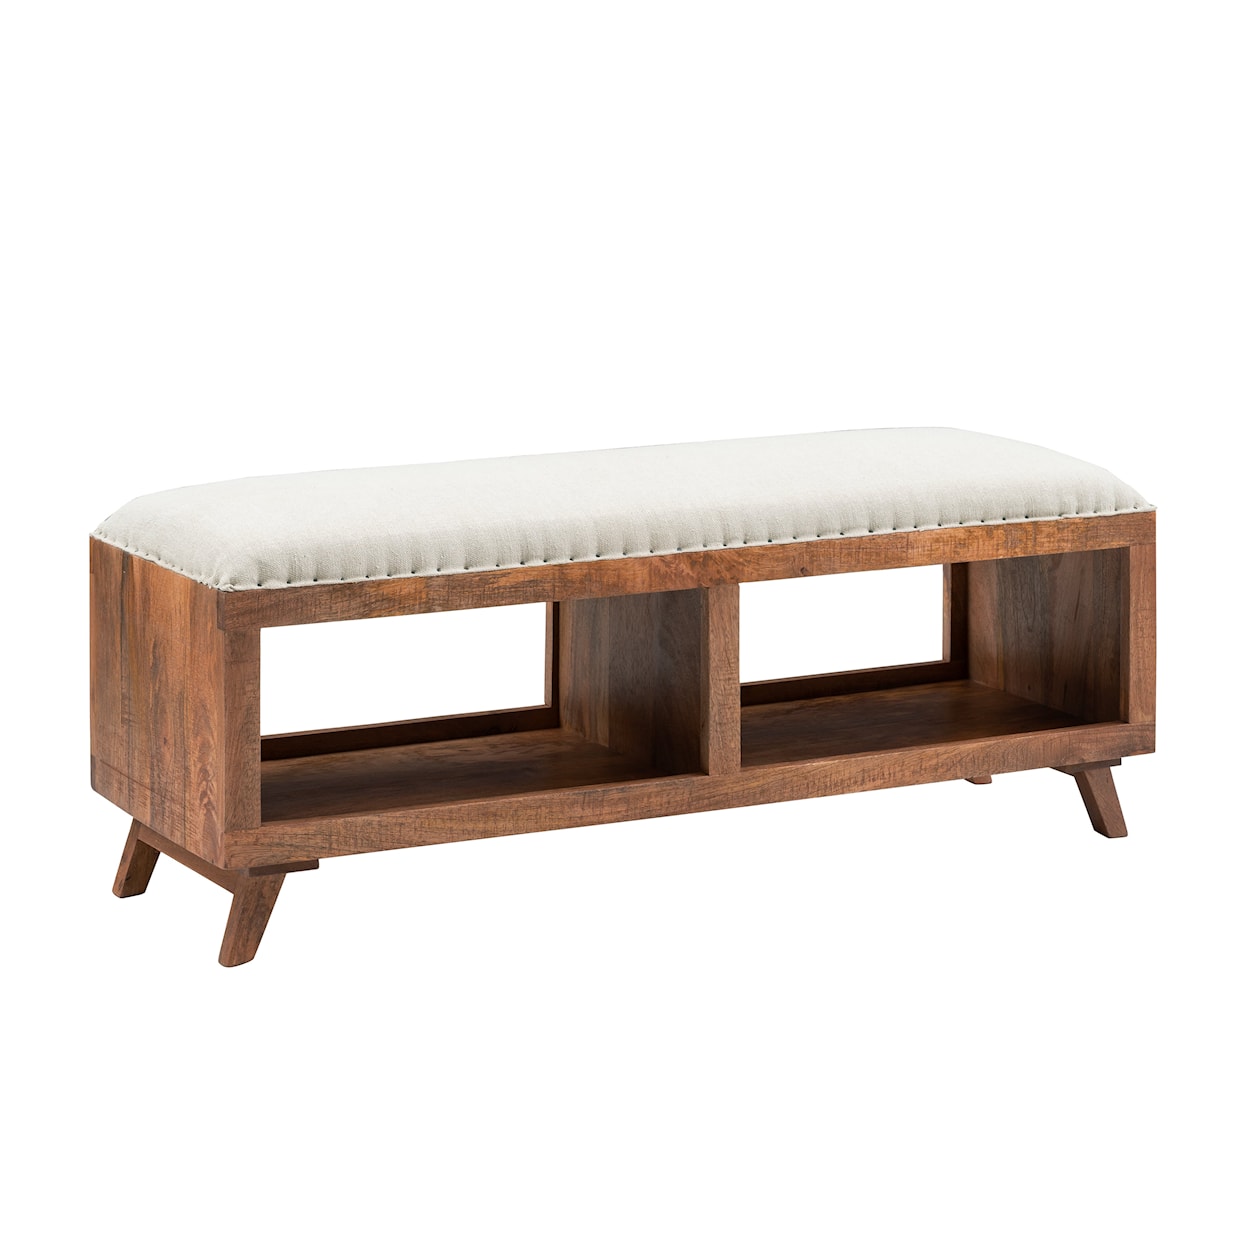 Powell Joana Upholstered Bench with Shelves